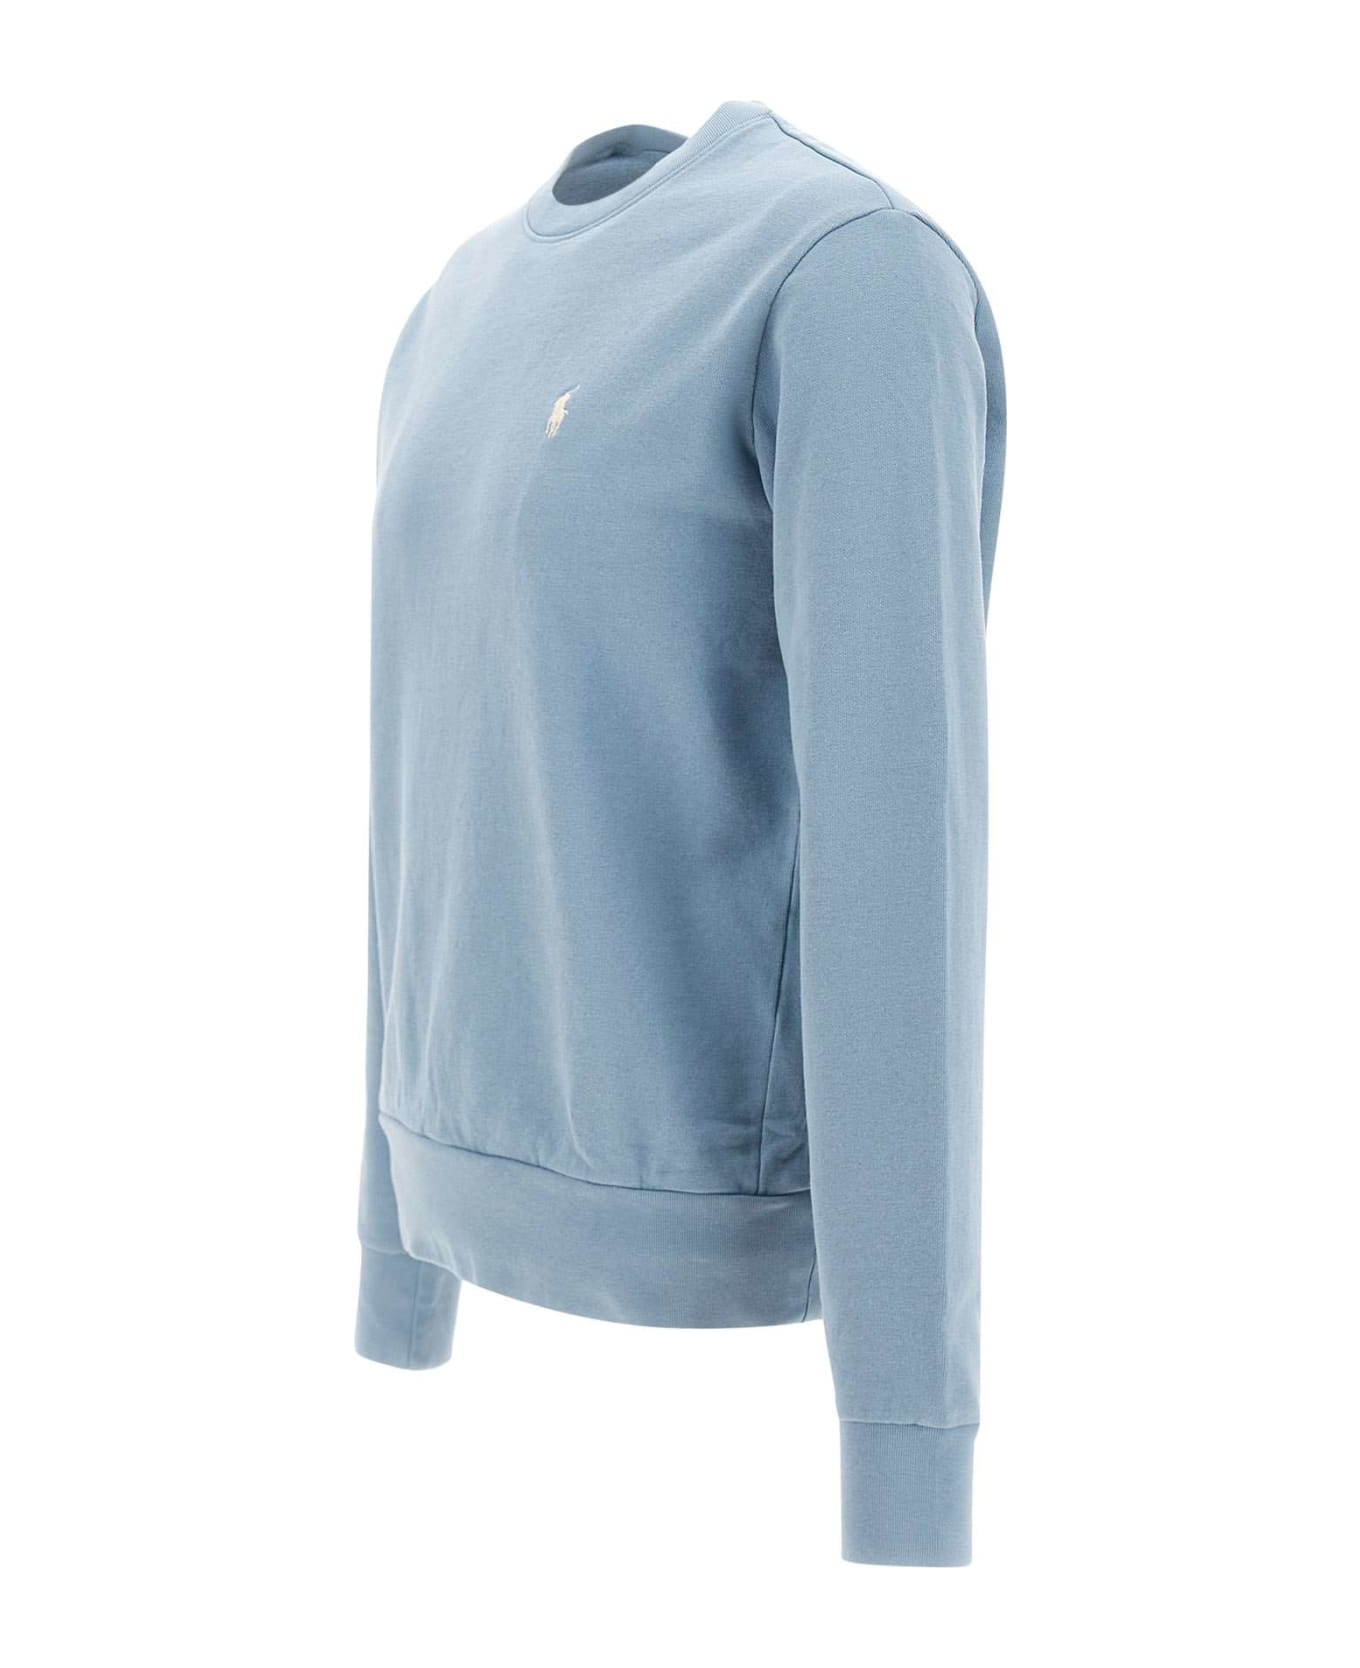 Polo Ralph Lauren "classics" Cotton Sweatshirt - BLUE フリース